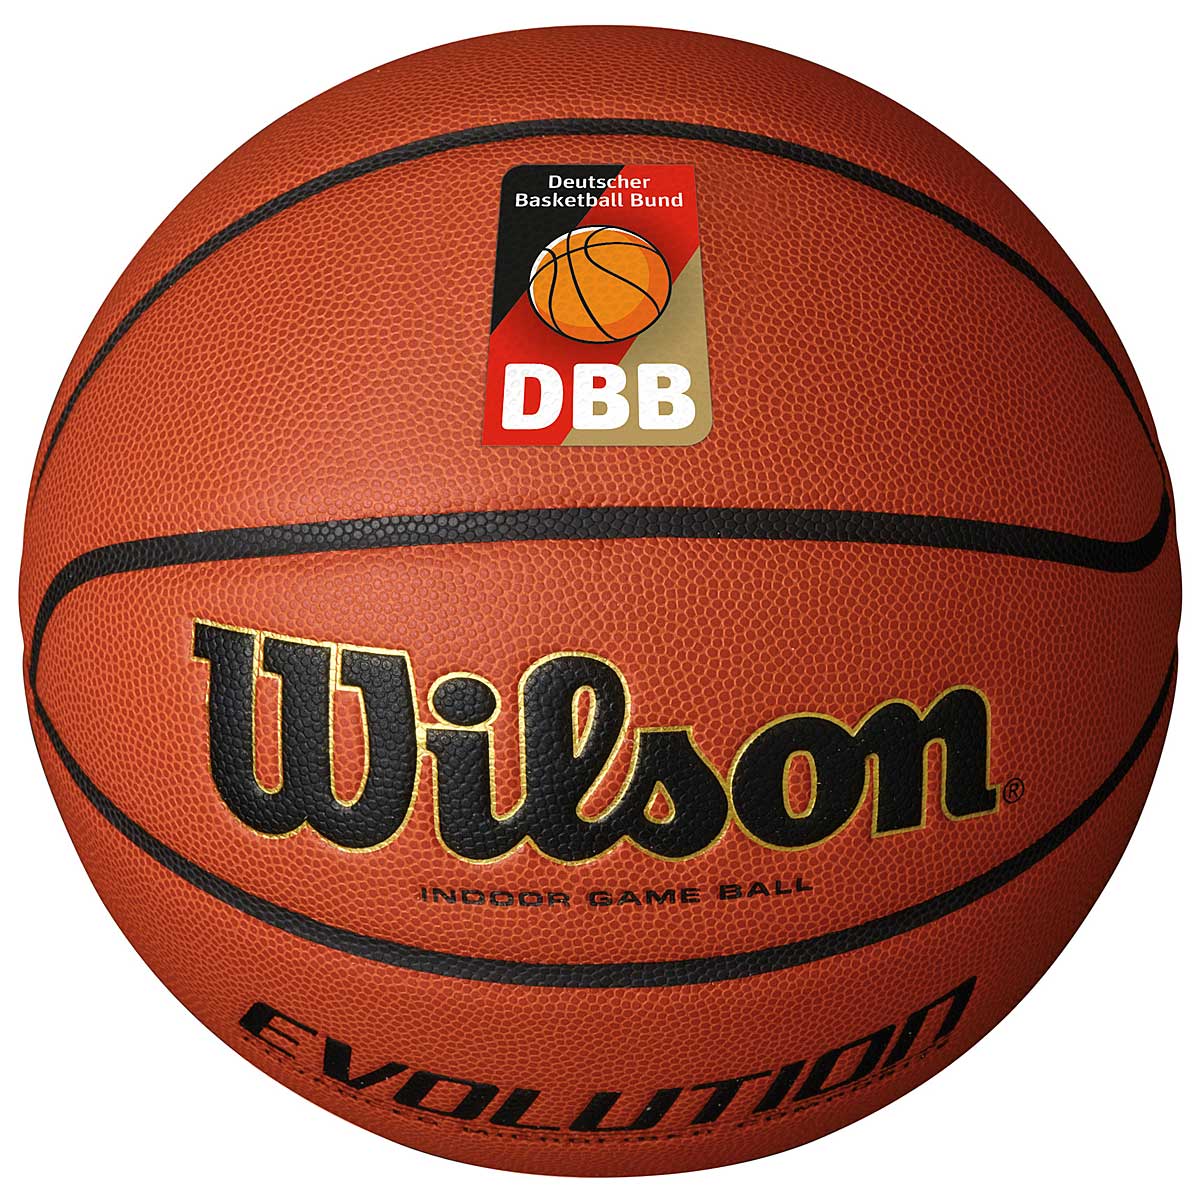 Image of Wilson Evolution Dbb 295 Game Basketball, Orange